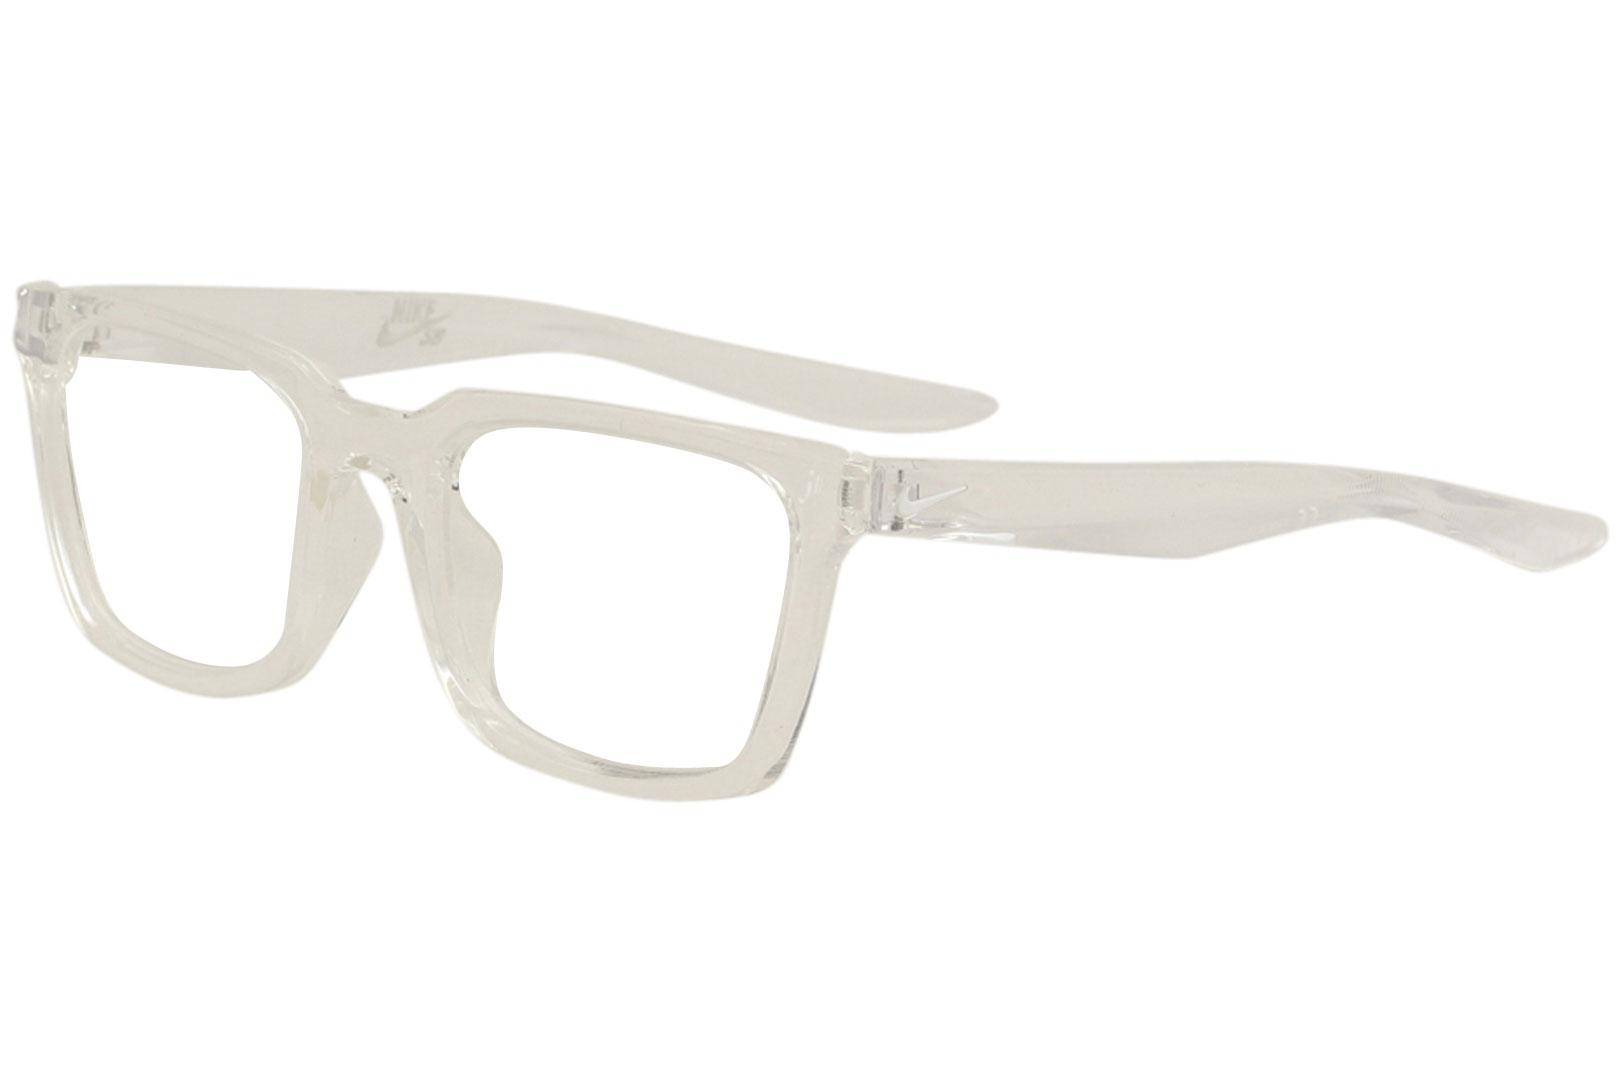 Nike SB Men's Eyeglasses 7111 Full Rim Optical Frame - Crystal   971 - Lens 50 Bridge 20 Temple 145mm -  Nautica